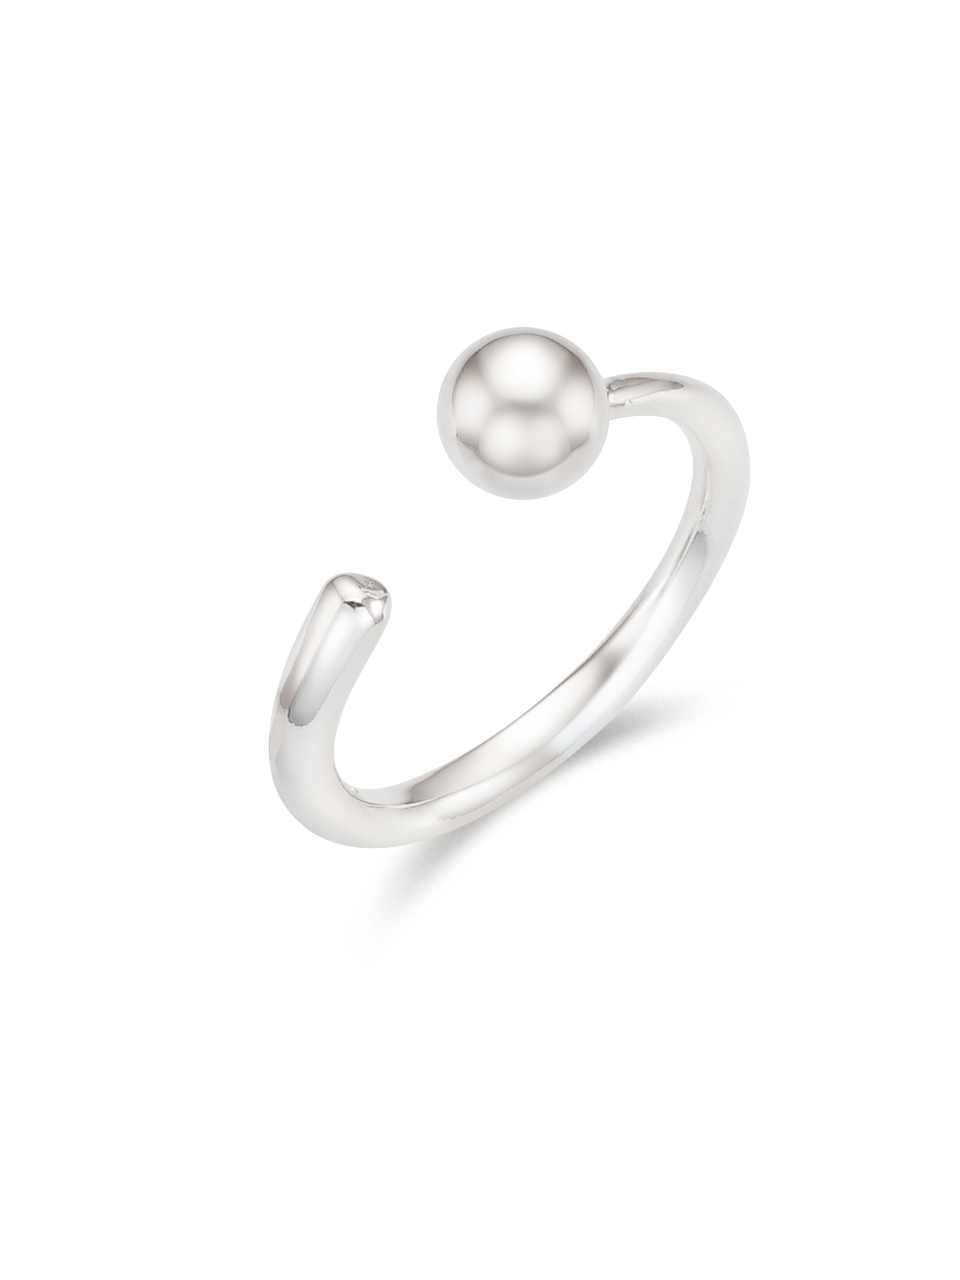 [silver925]shin ball ring